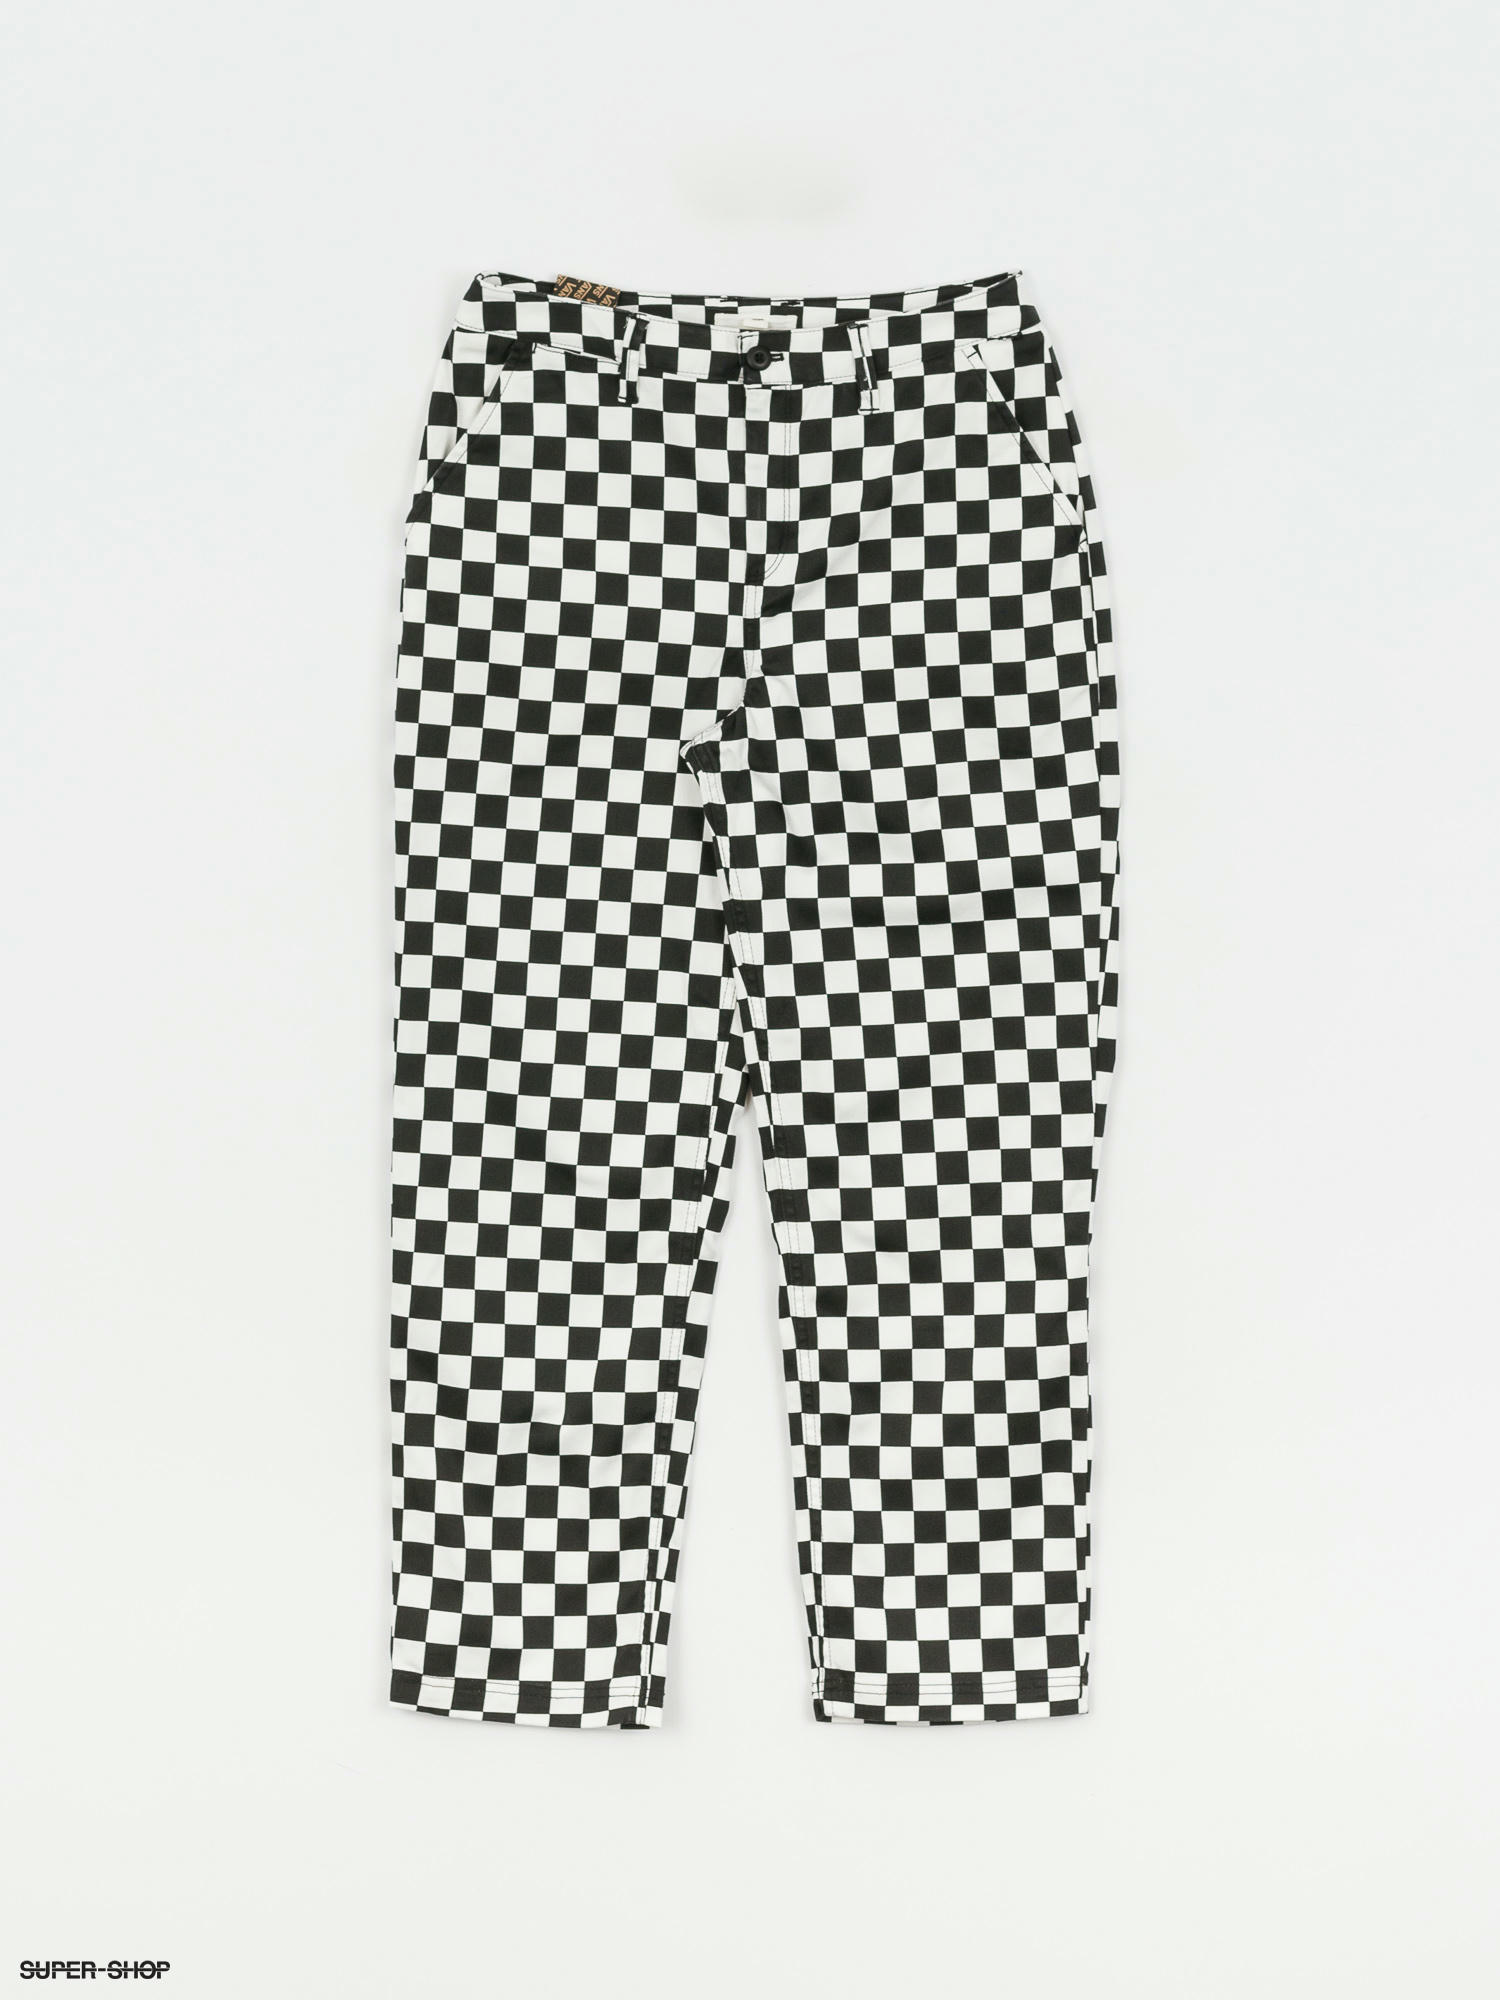 checkerboard shorts vans